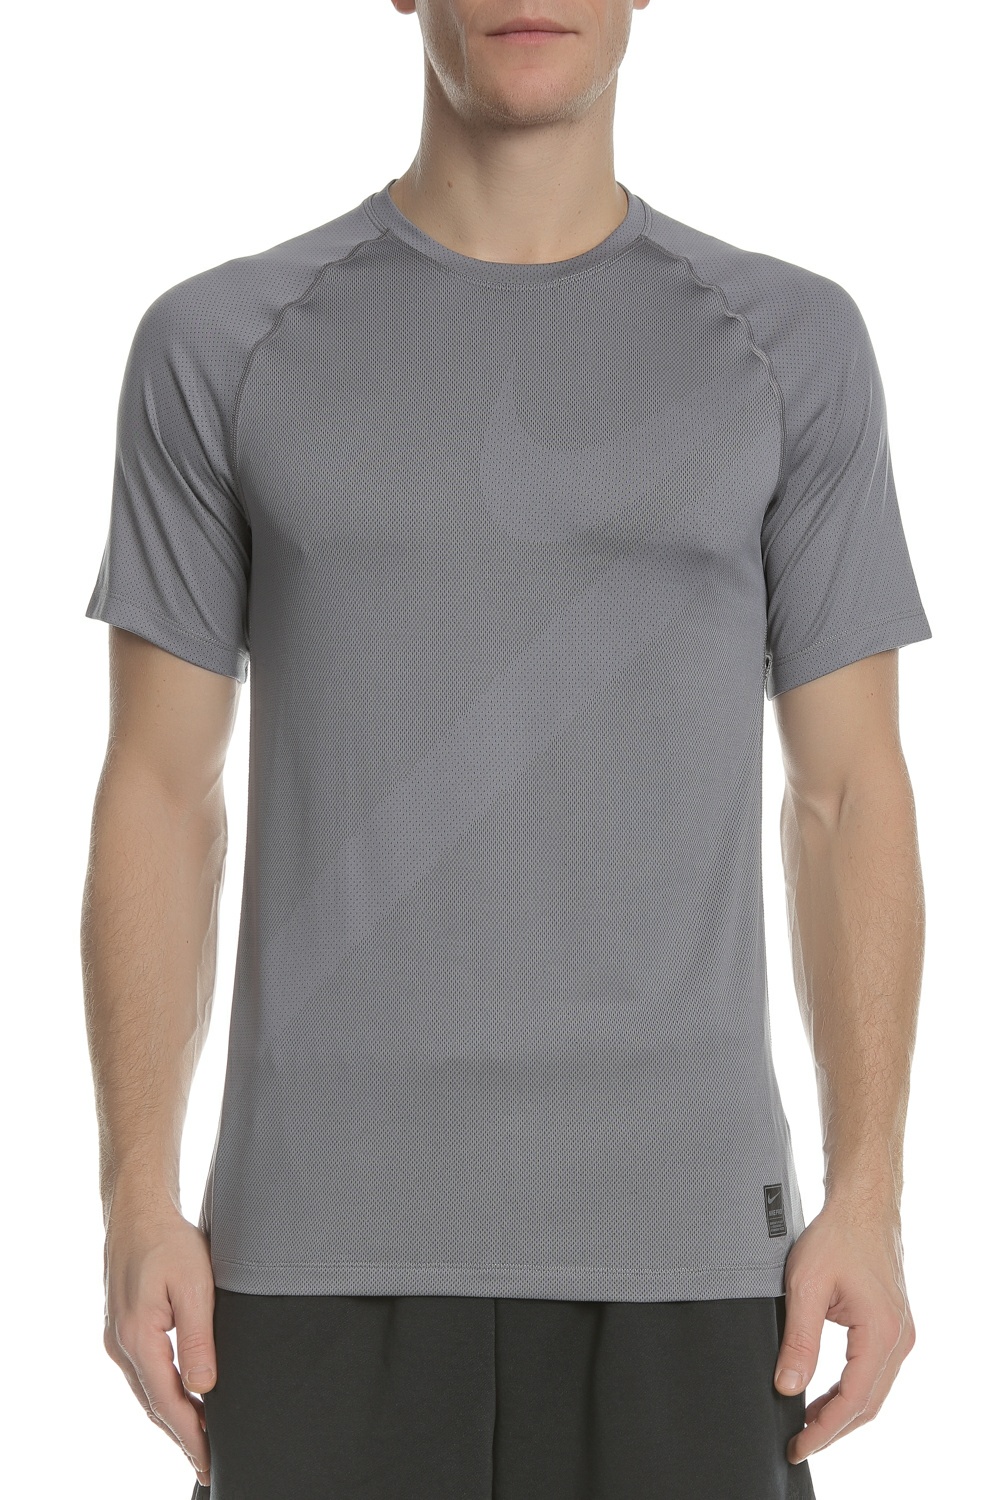 NIKE - Ανδρική κοντομάνικη μπλούζα Nike Pro γκρι Ανδρικά/Ρούχα/Αθλητικά/T-shirt